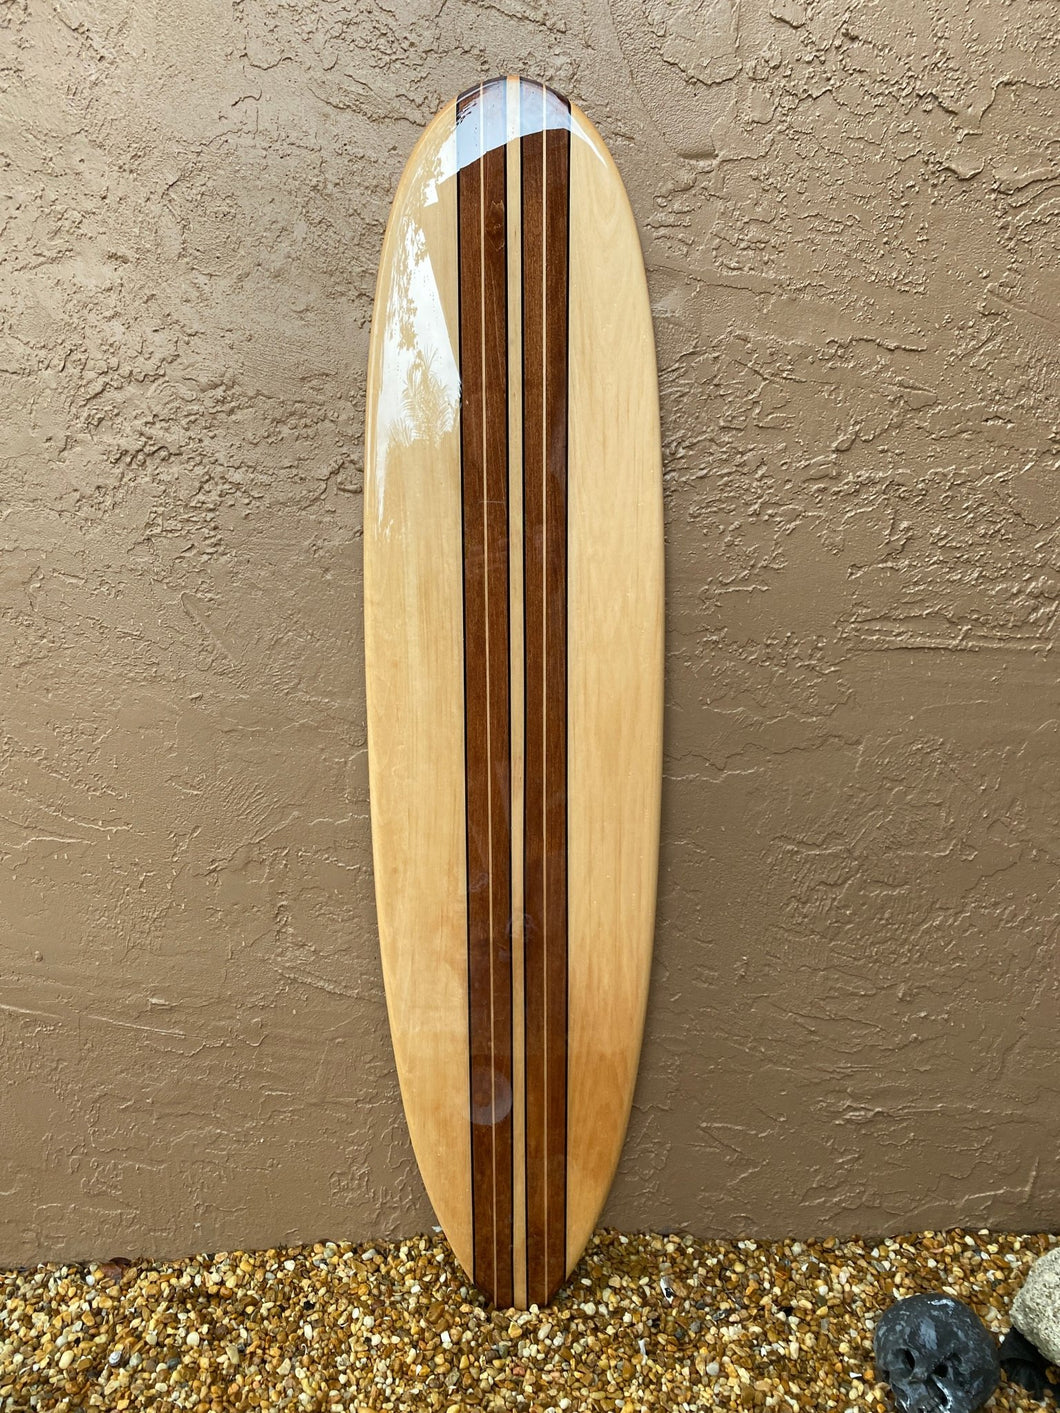 Shipwrecked Surfboard Coffee Table - Tiki Soul Coastal Surfboard Decor